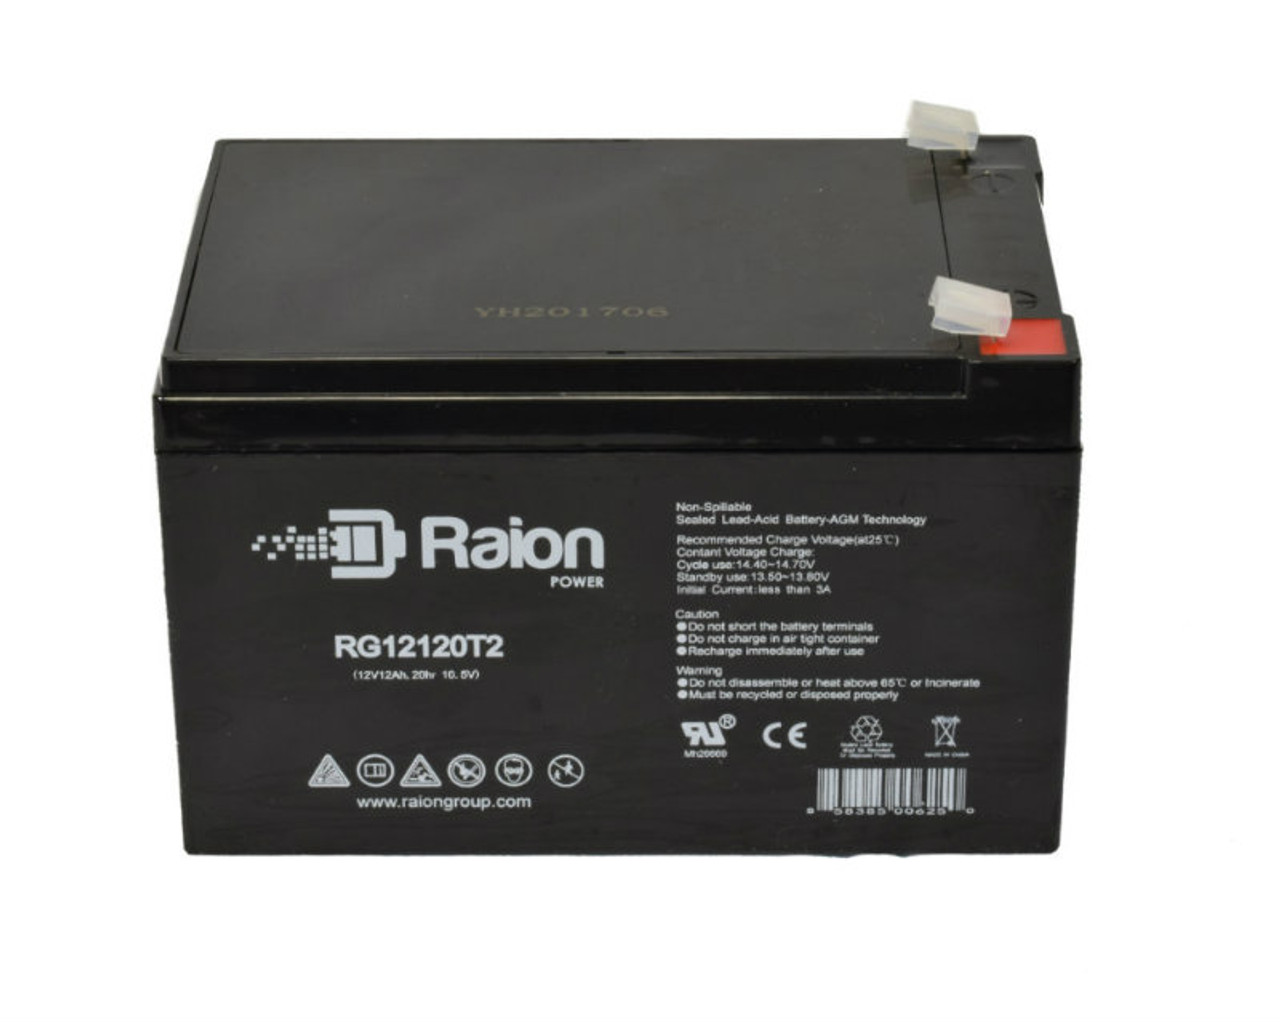 Raion Power RG12120T2 SLA Battery for Enersys HX50